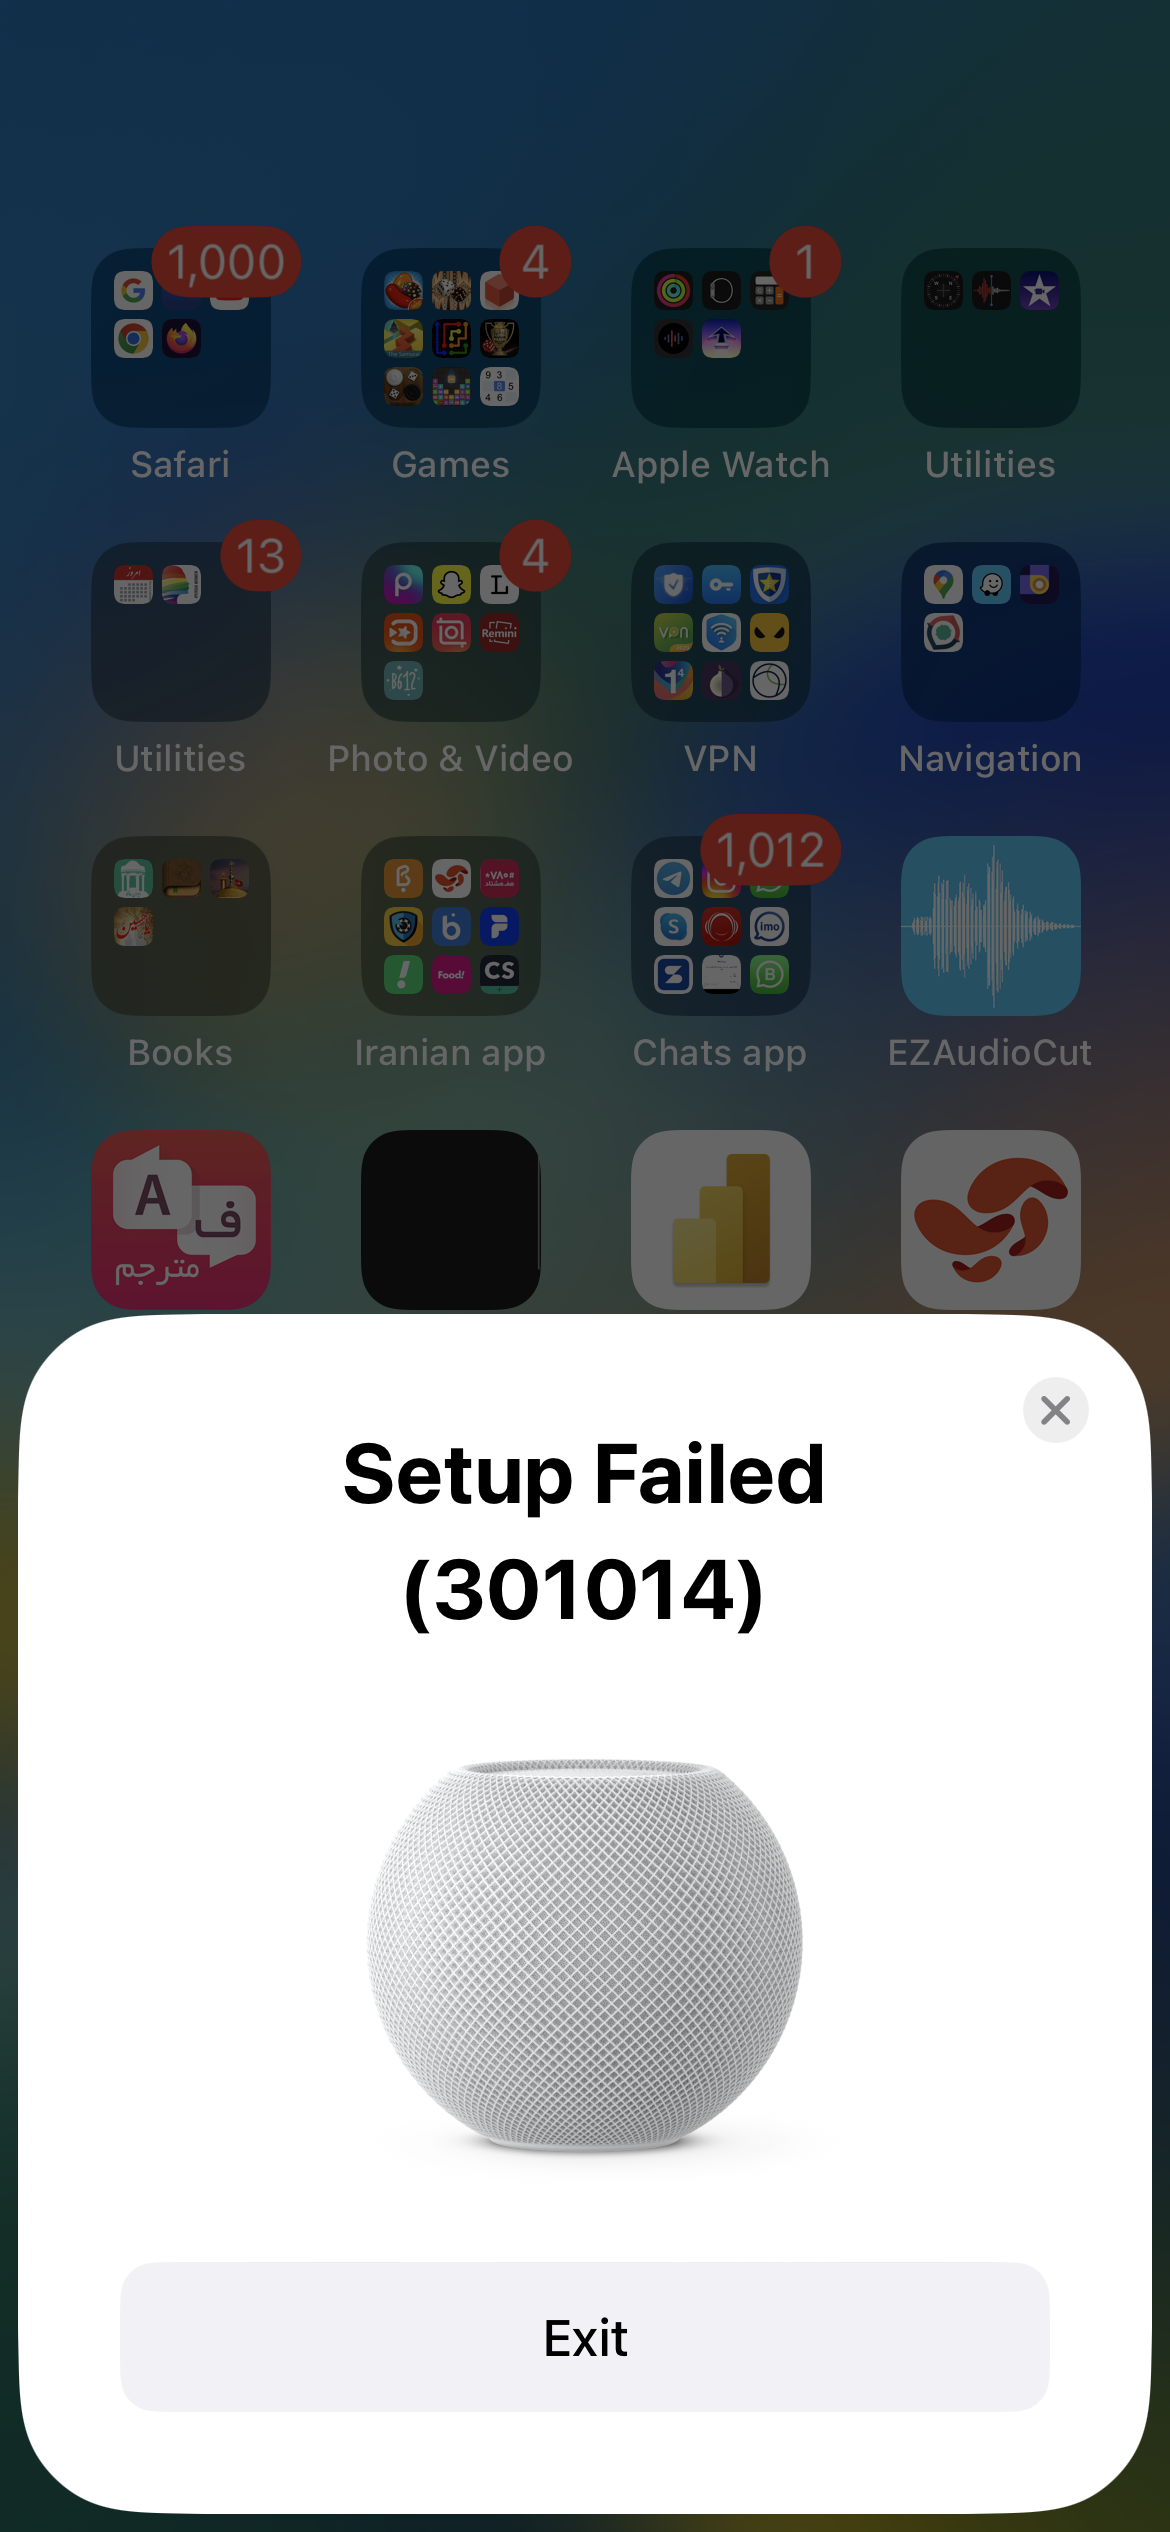 Error 301014 in homepod - Apple Community